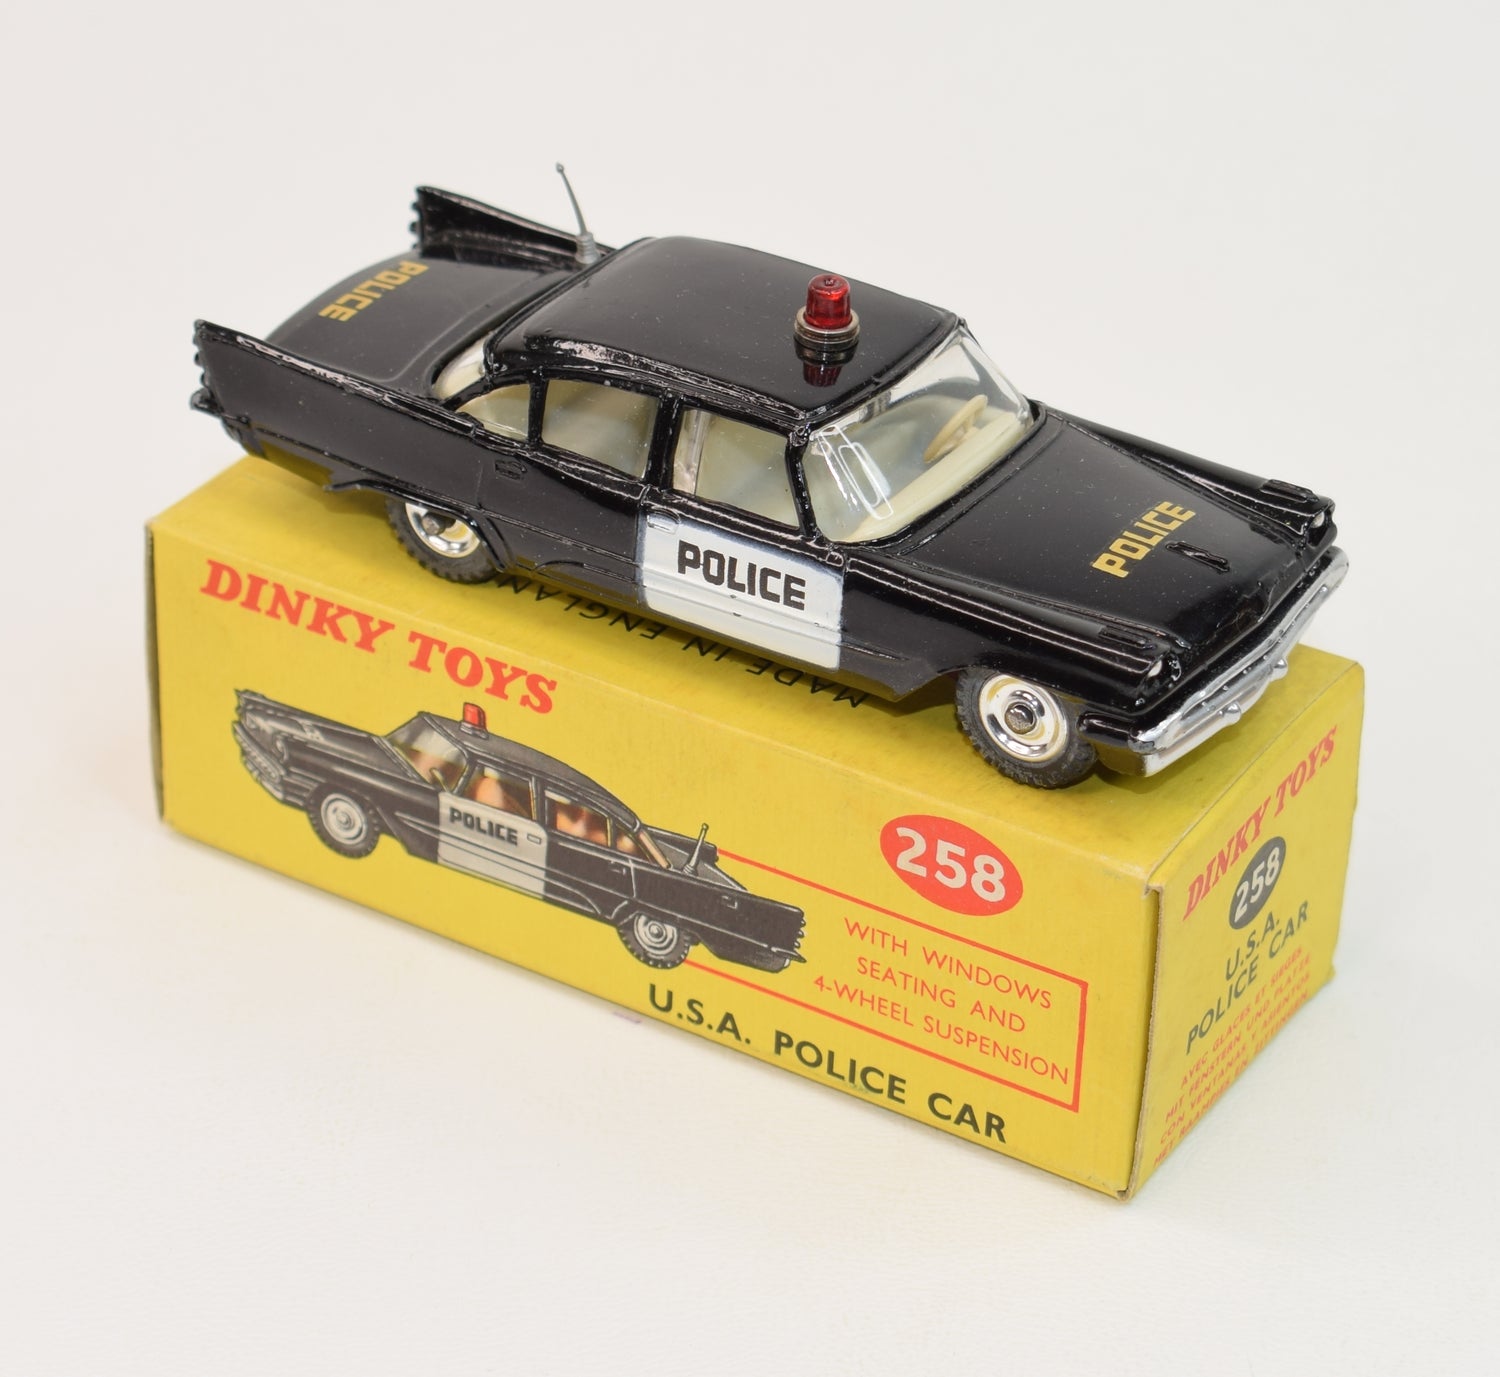 Dinky toys 258 Desoto Fireflite Virtually Mint/Boxed 'Carlton' Collection